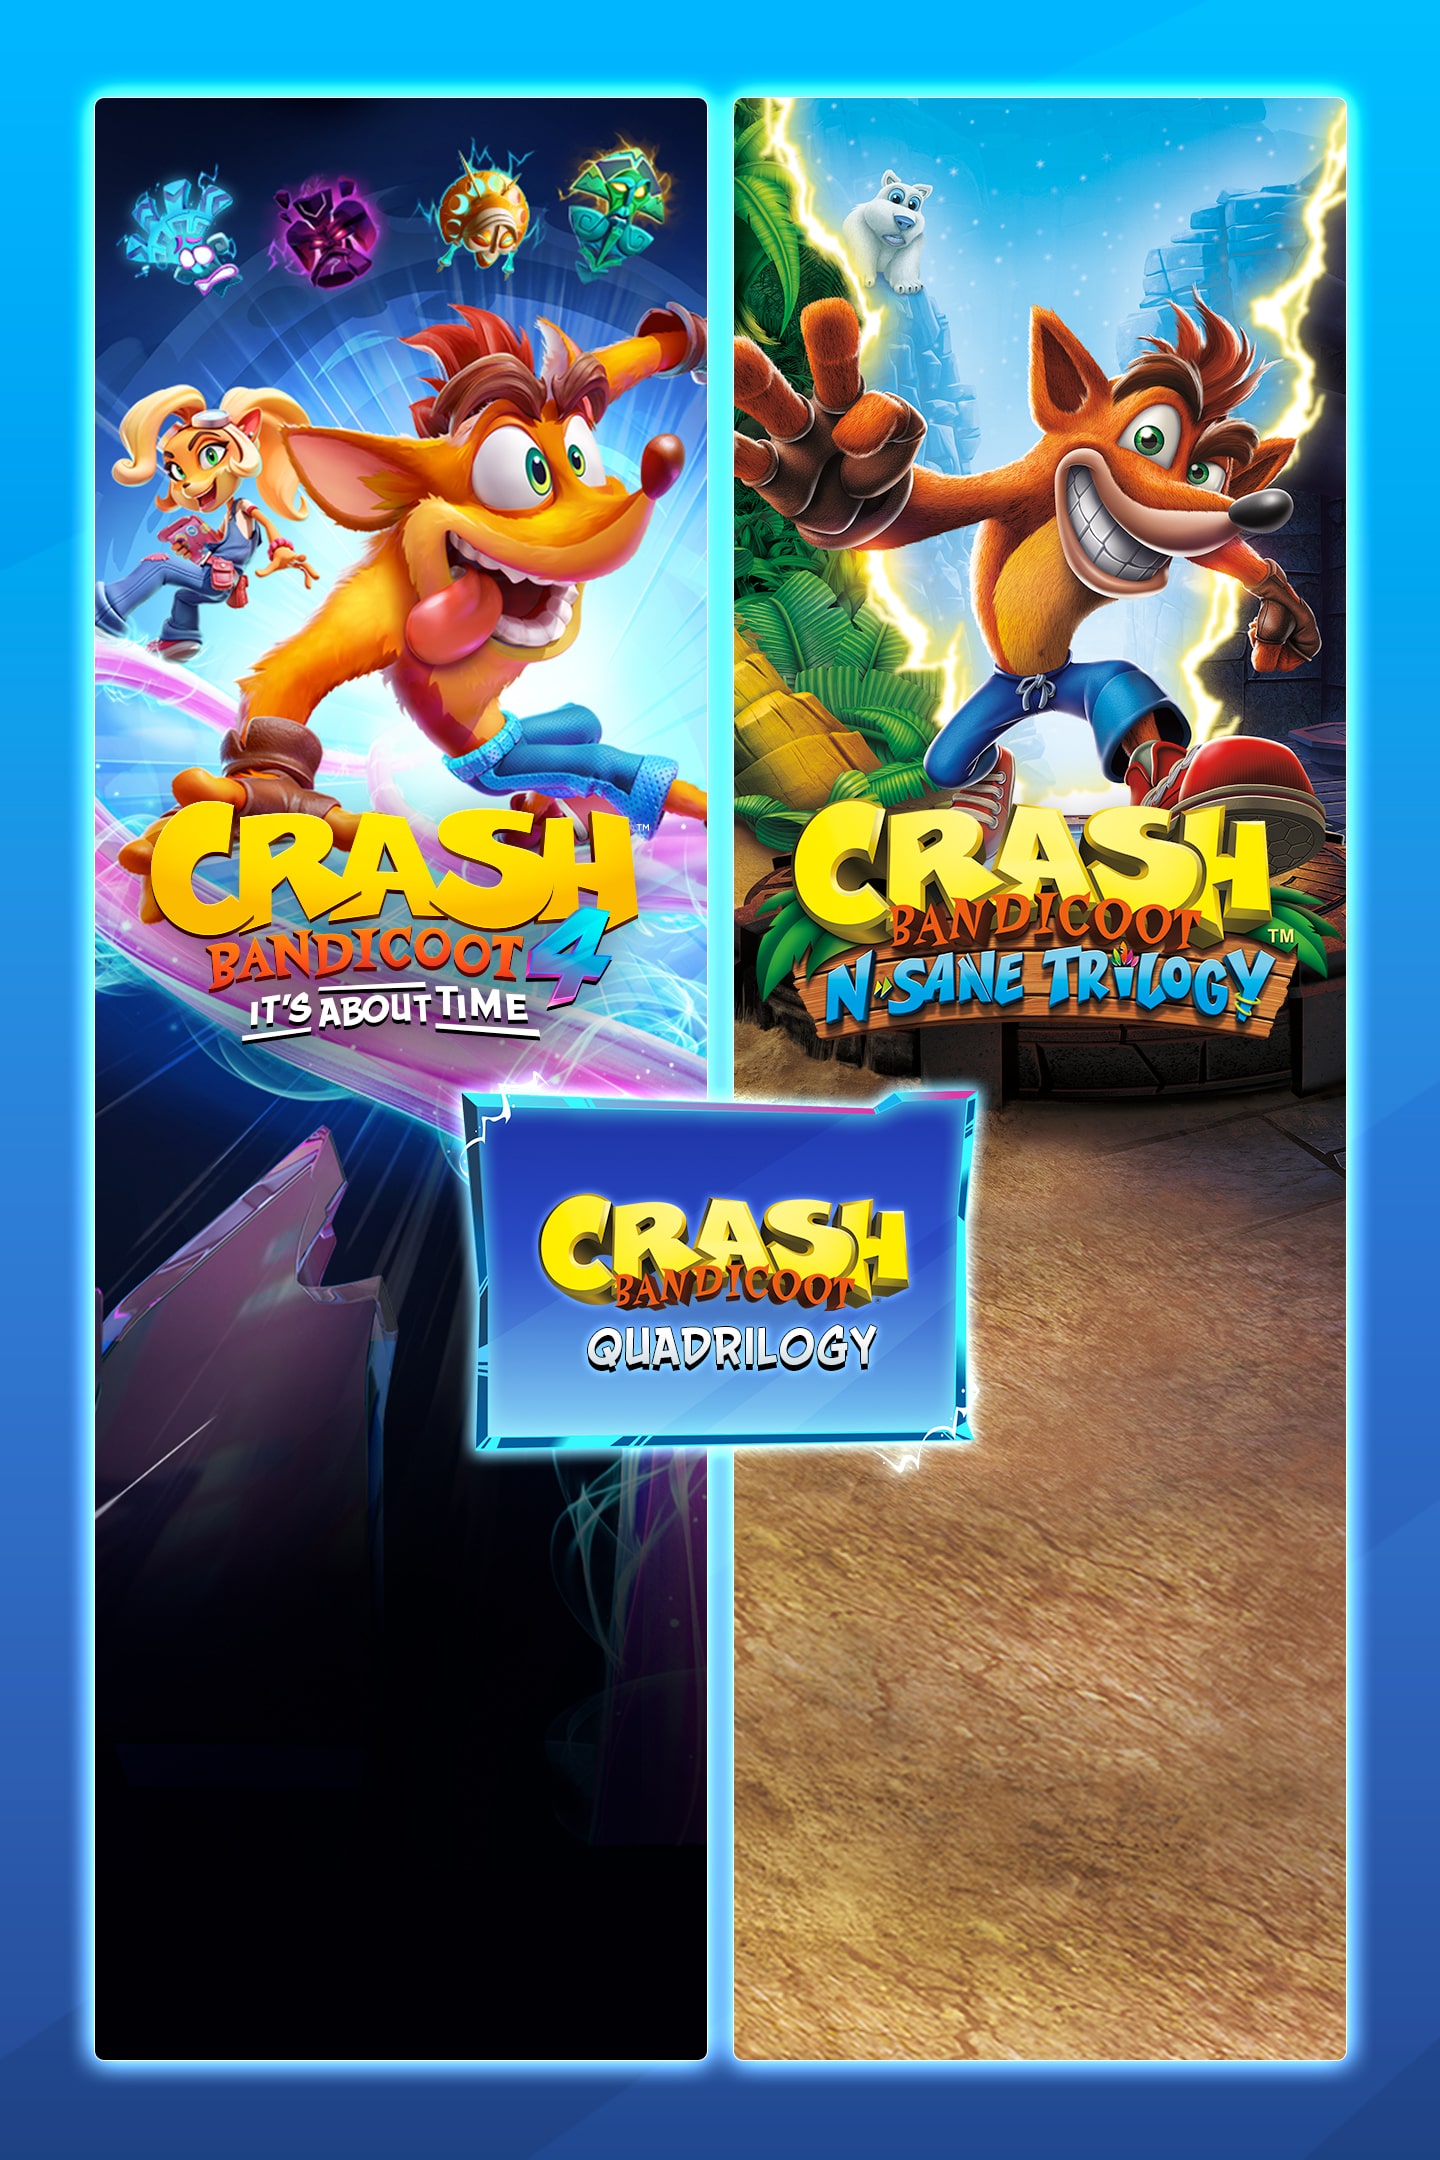 Buy Crash Bandicoot Crashiversary Bundle PS5 Compare Prices